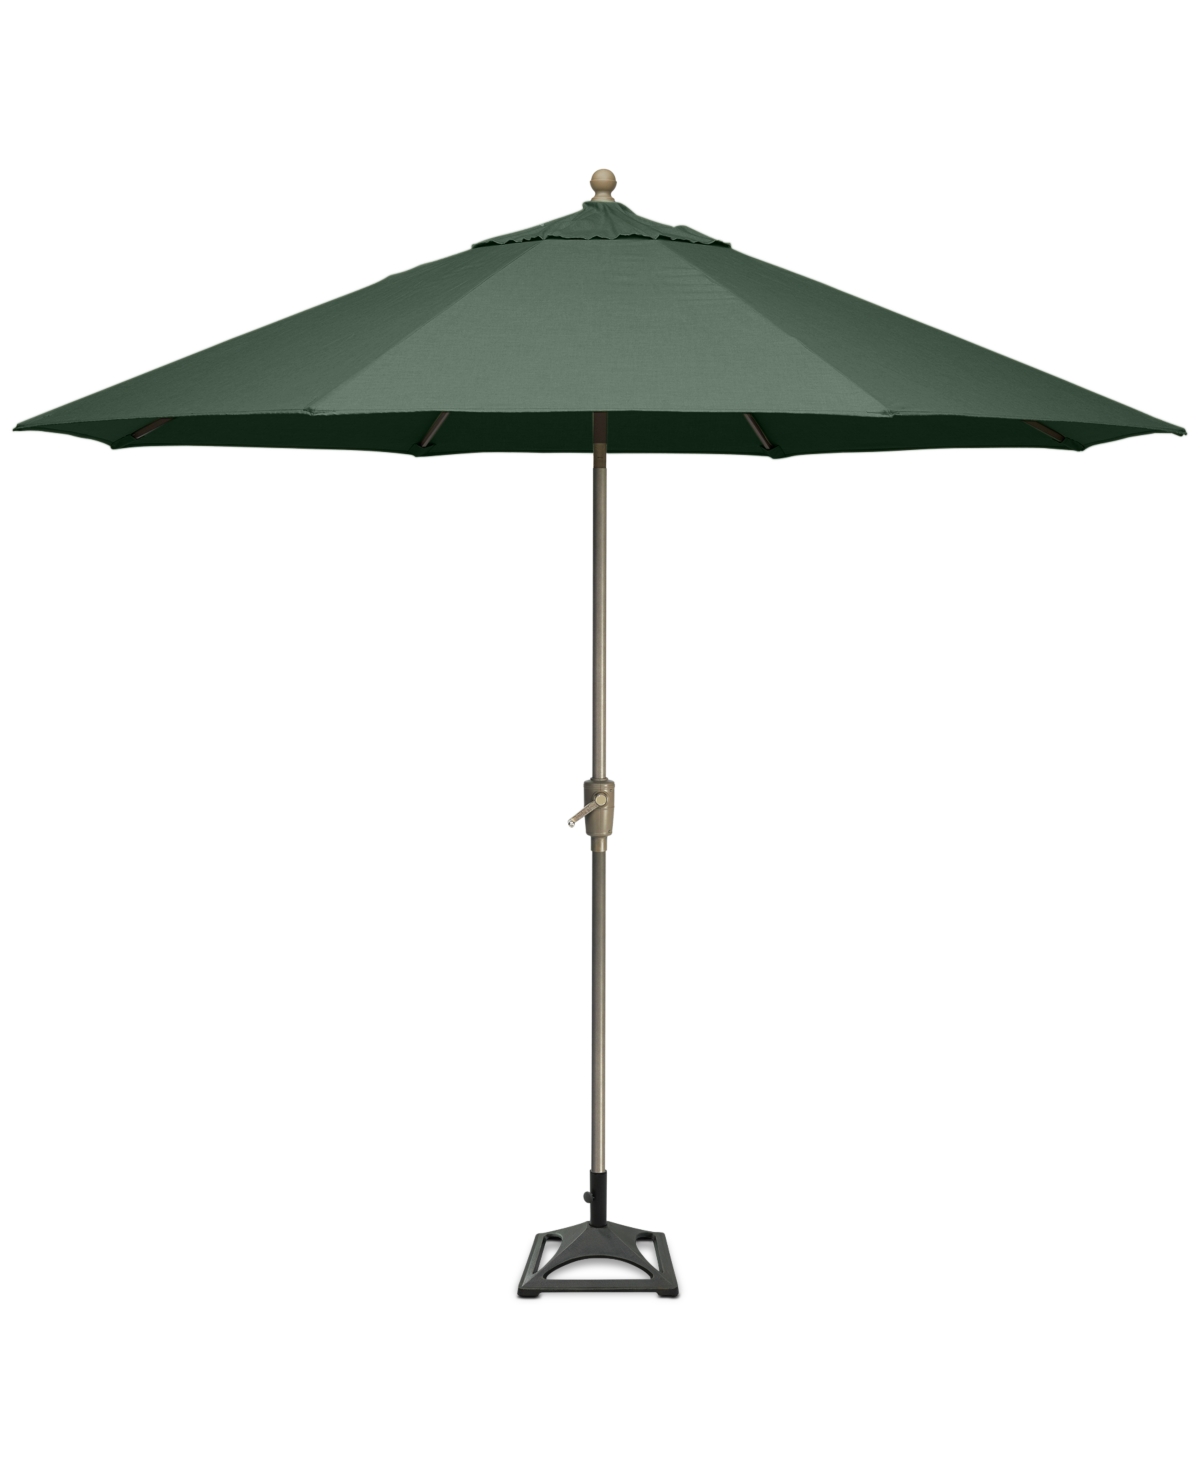 Agio Wayland Outdoor 9' Auto-tilt Umbrella And Base, Created For Macy's In Outdura Grasshopper